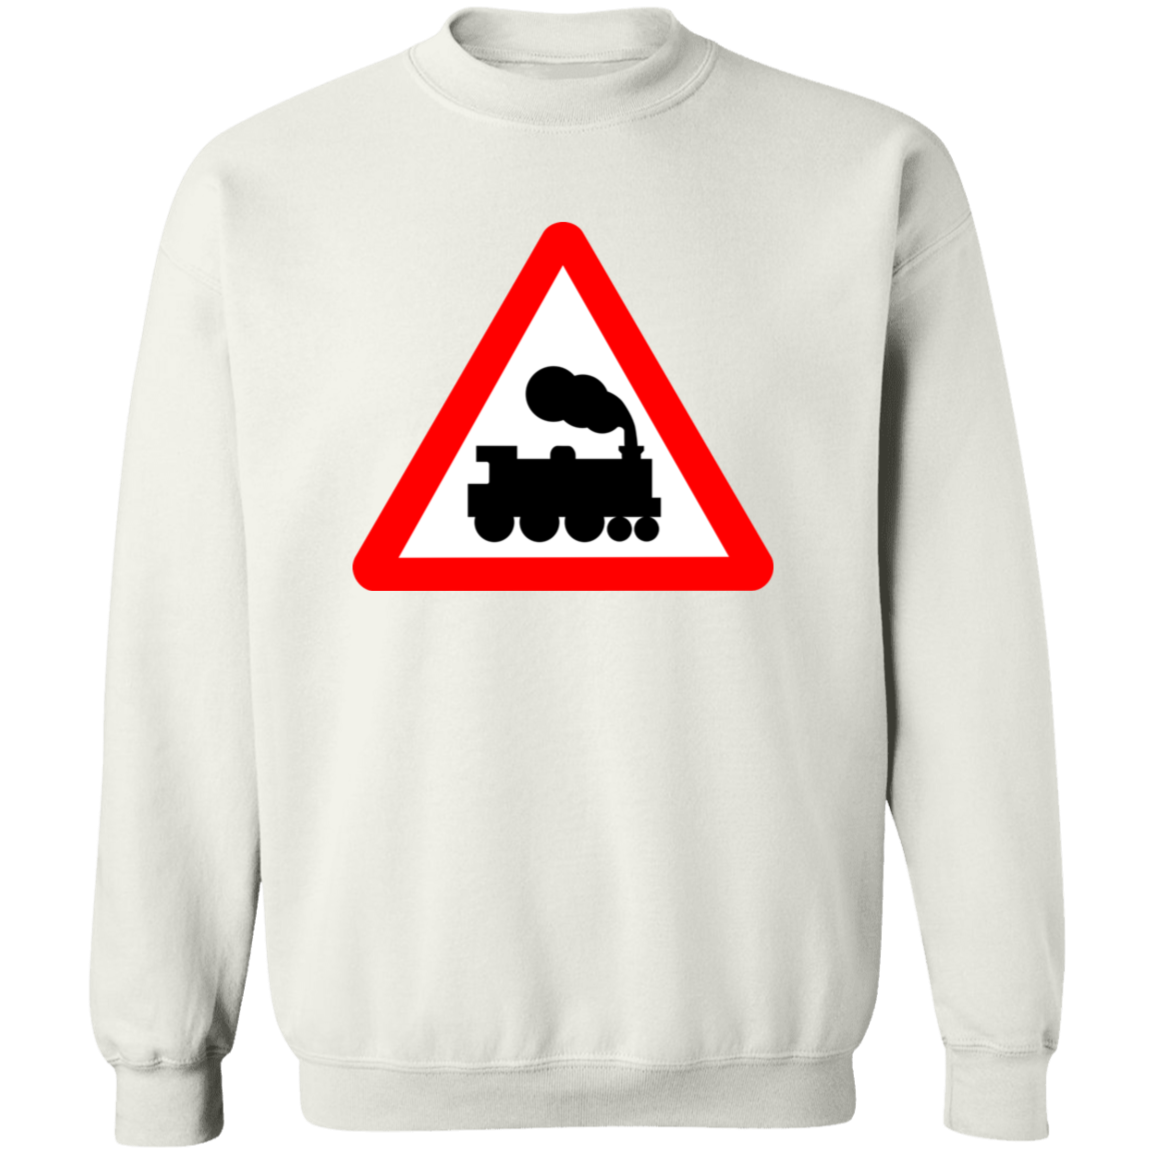 Warning Railroad Crossing - T-shirts, Hoodies and Sweatshirts